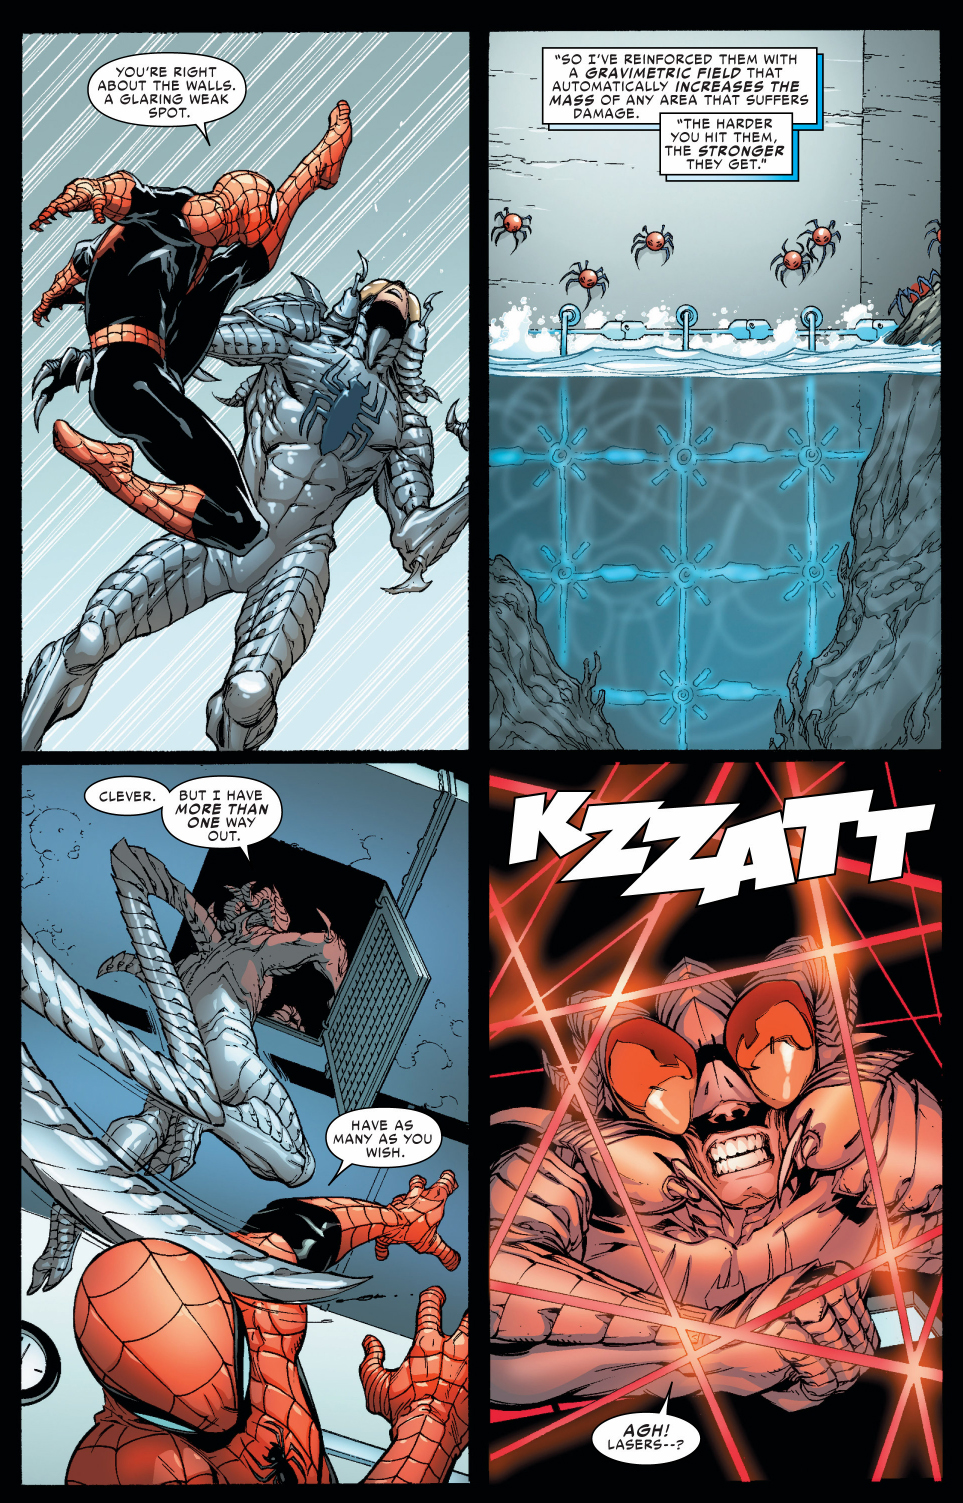 superior spider-man counters spider-slayer's escape plans